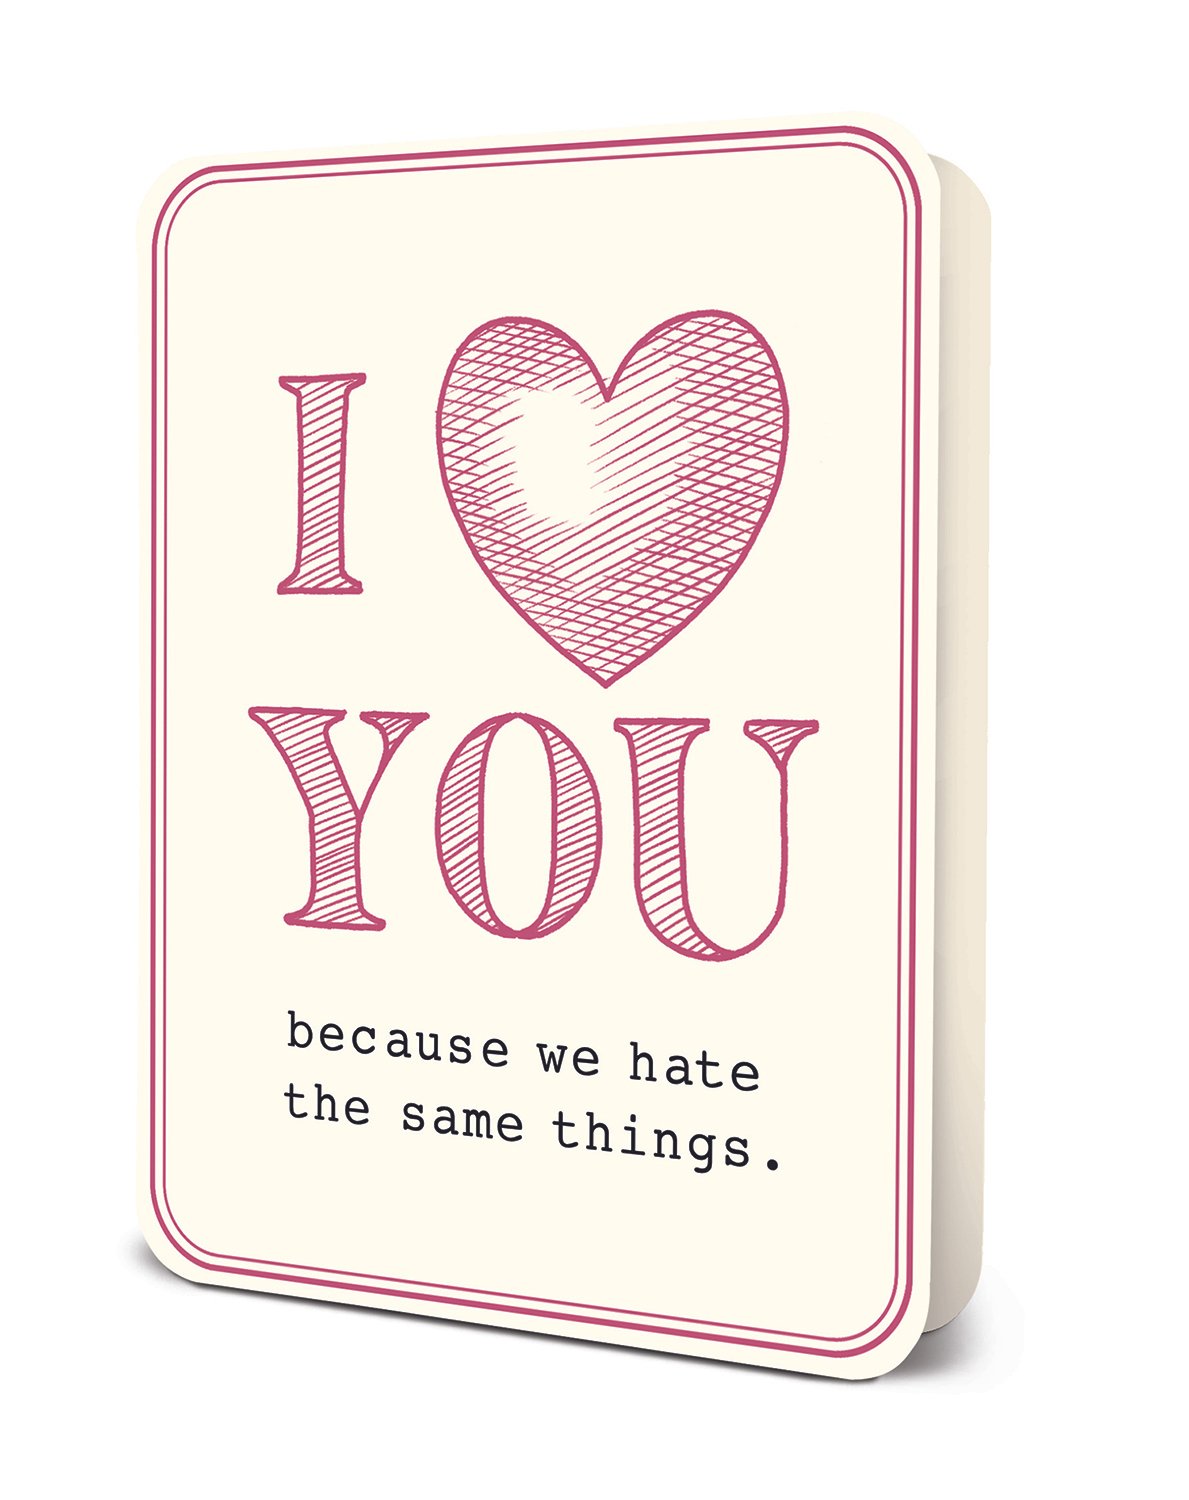 We Hate the Same Things - Greeting Card Greeting Card Orange Circle Studio